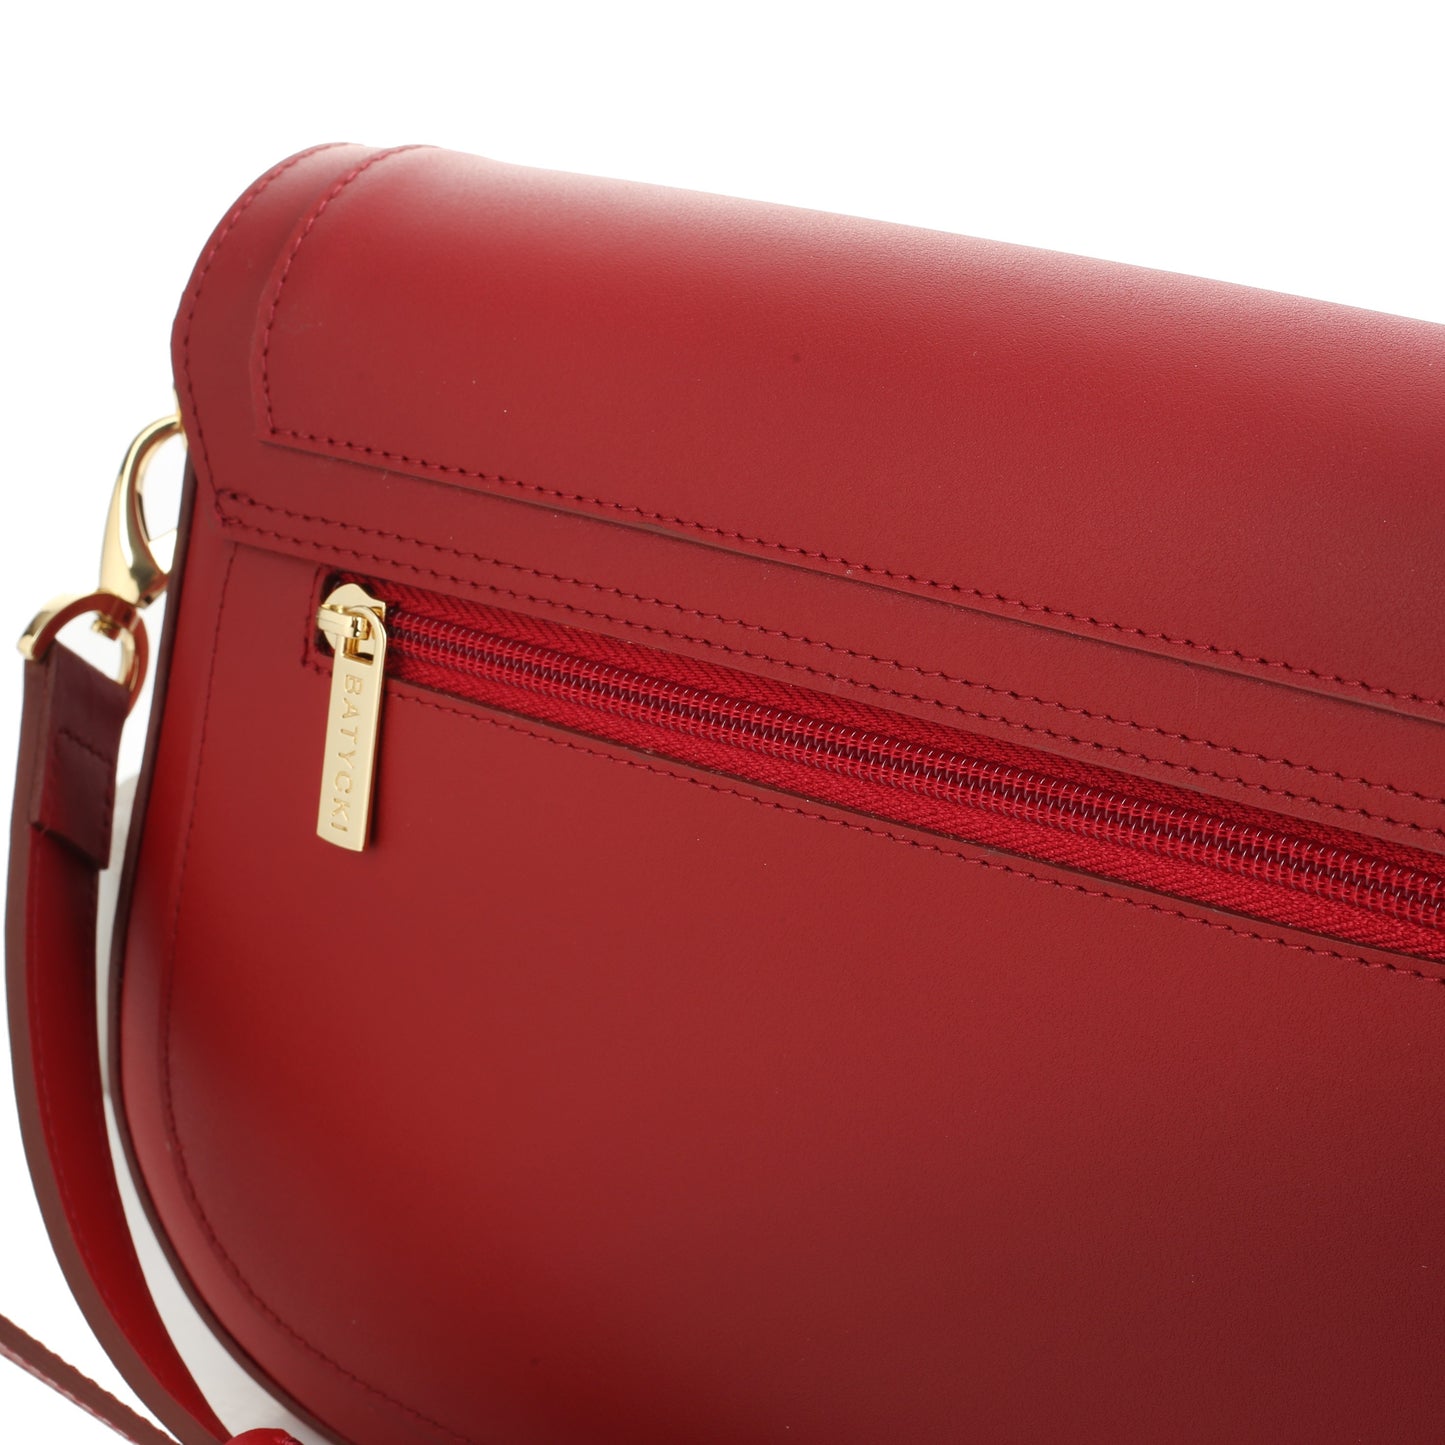 CORDA CLARET women's leather handbag